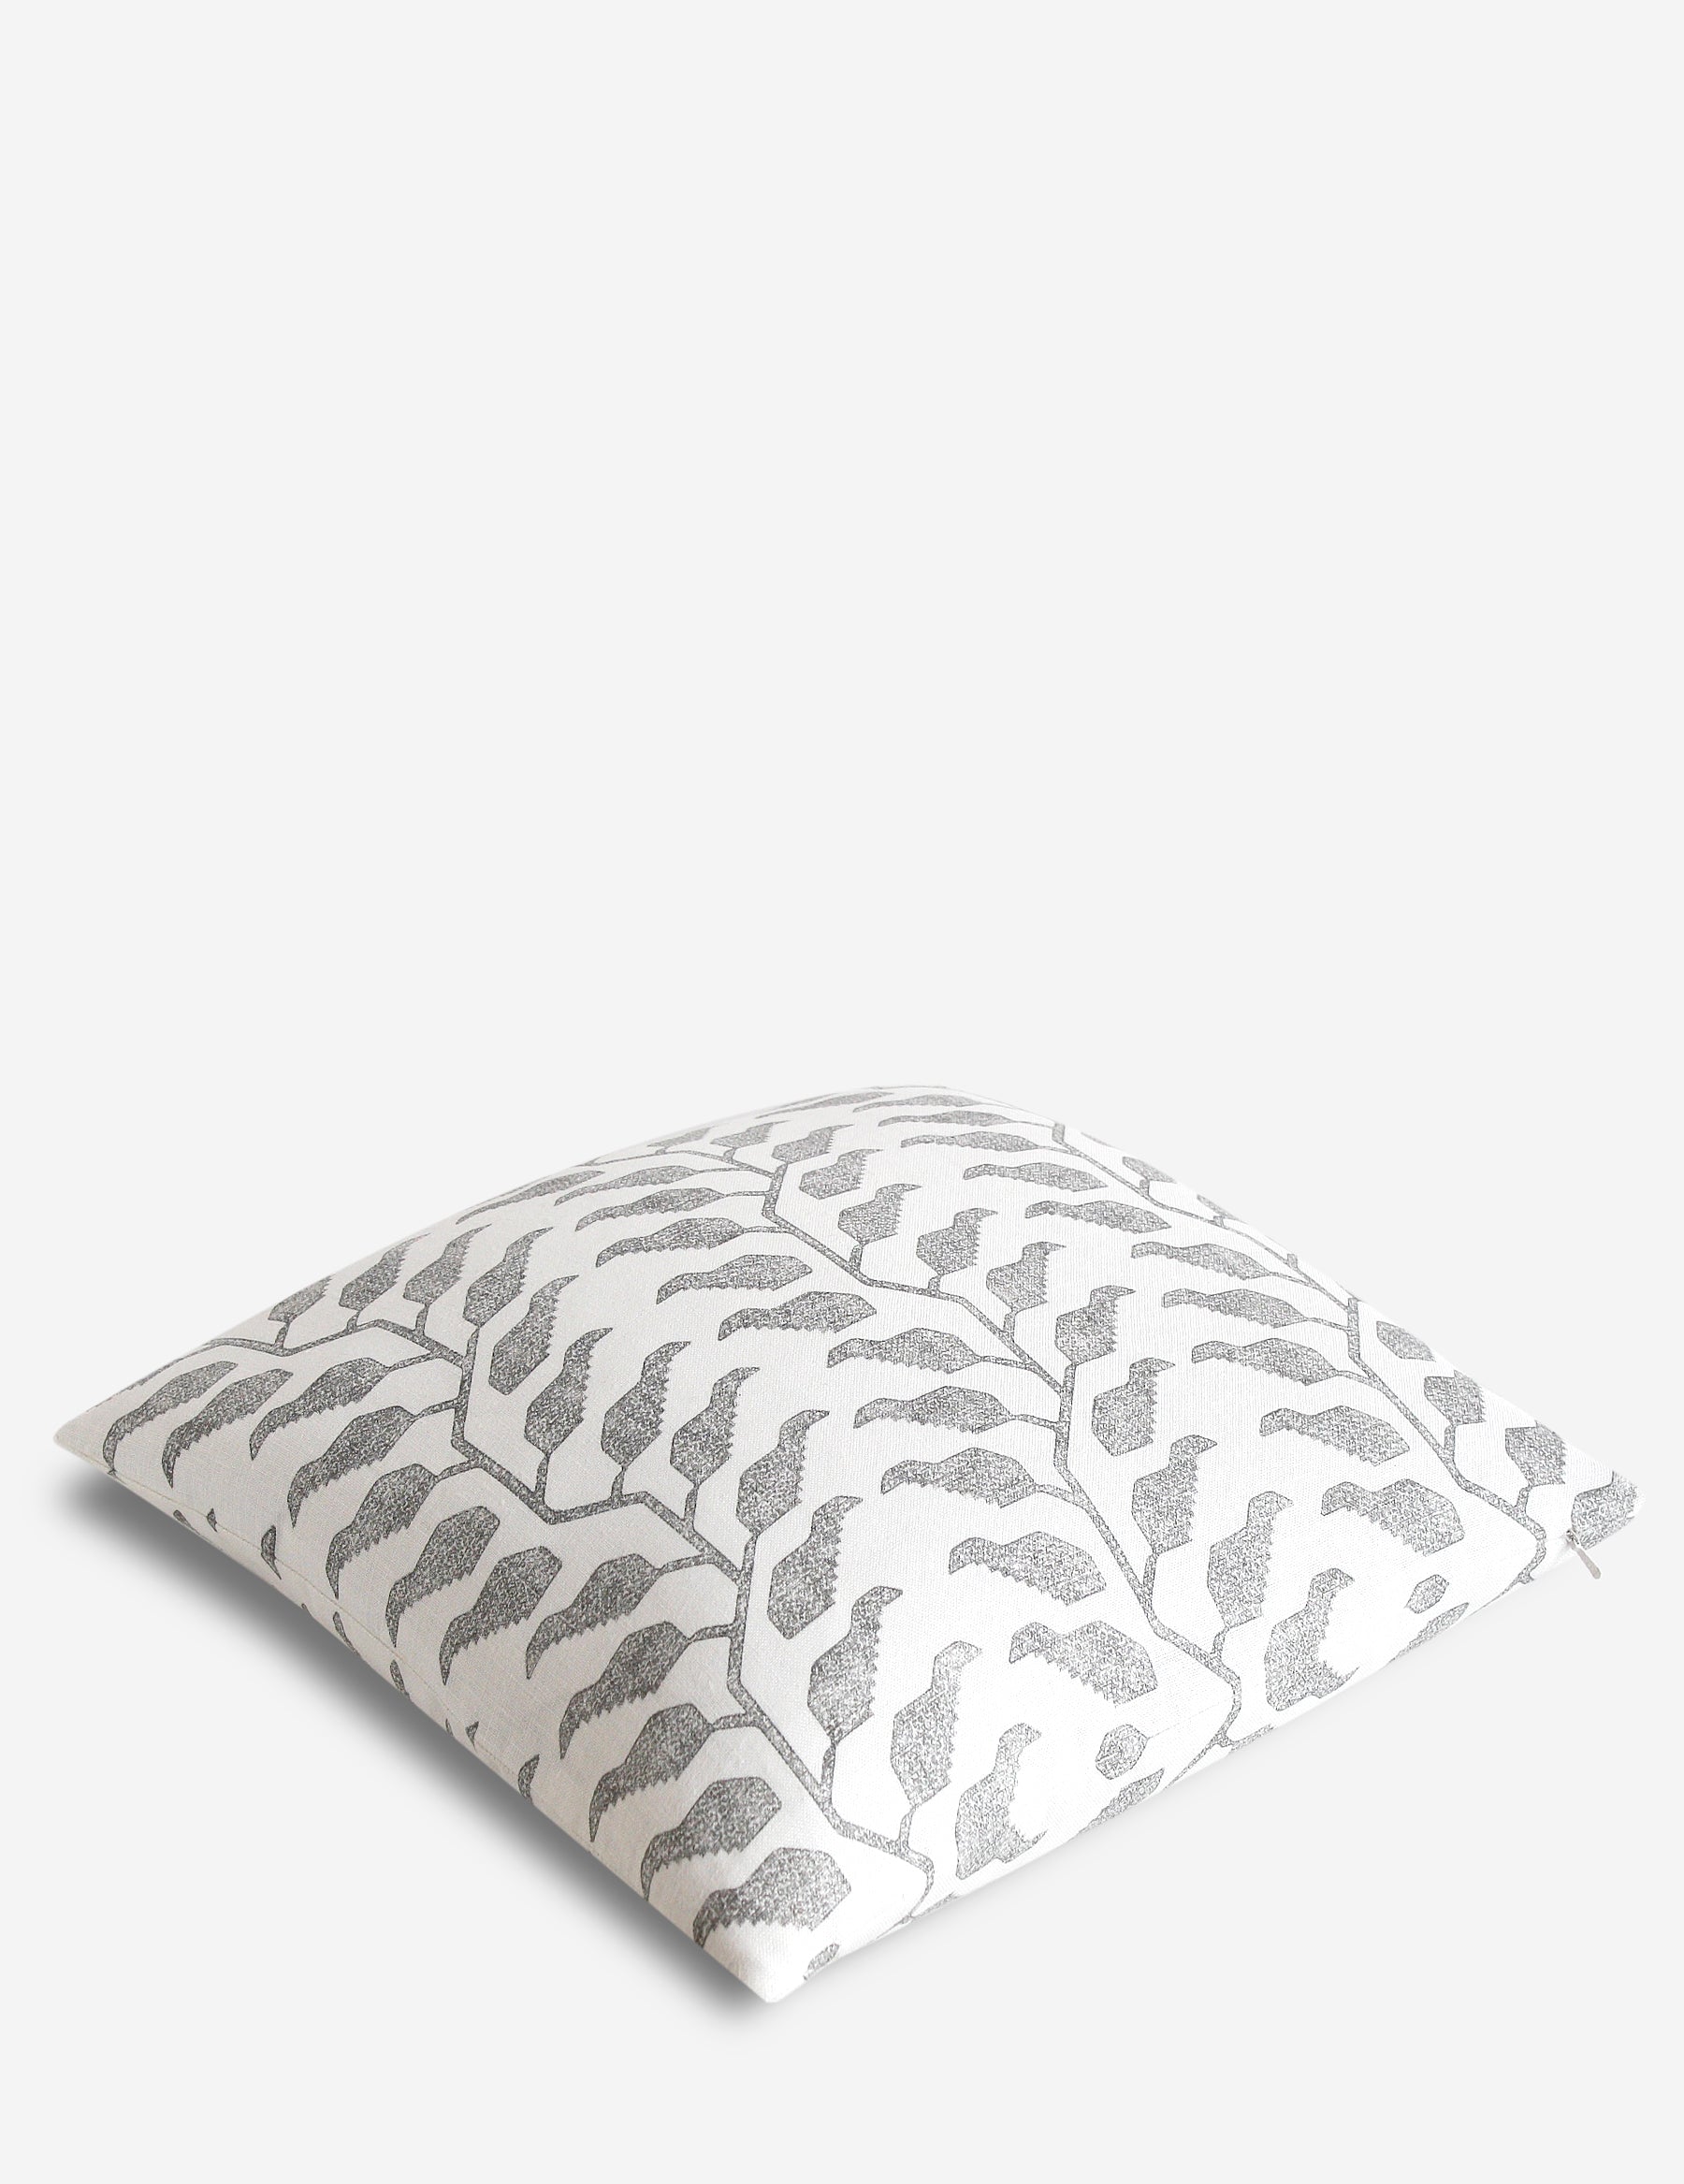 Folio Pillow / Graphite Oyster